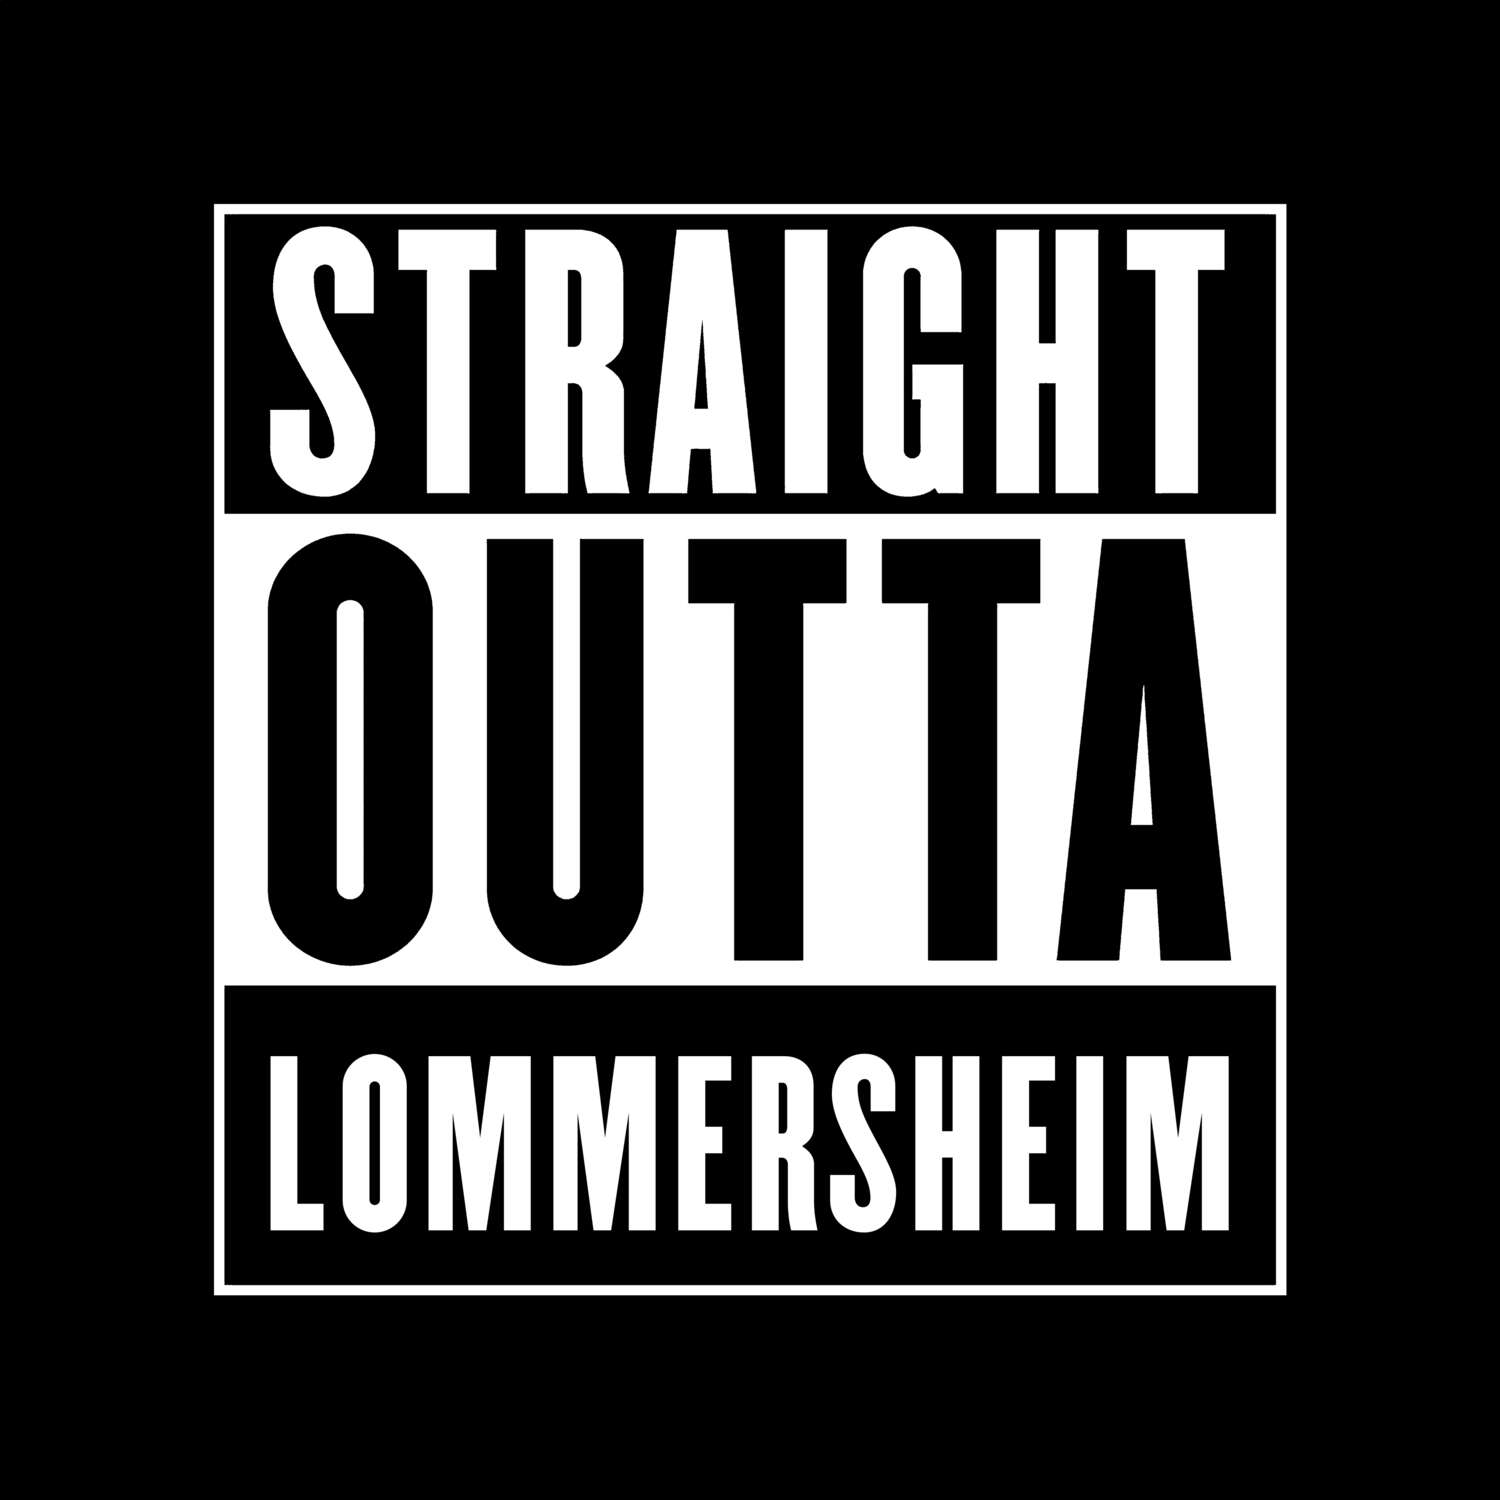 Lommersheim T-Shirt »Straight Outta«